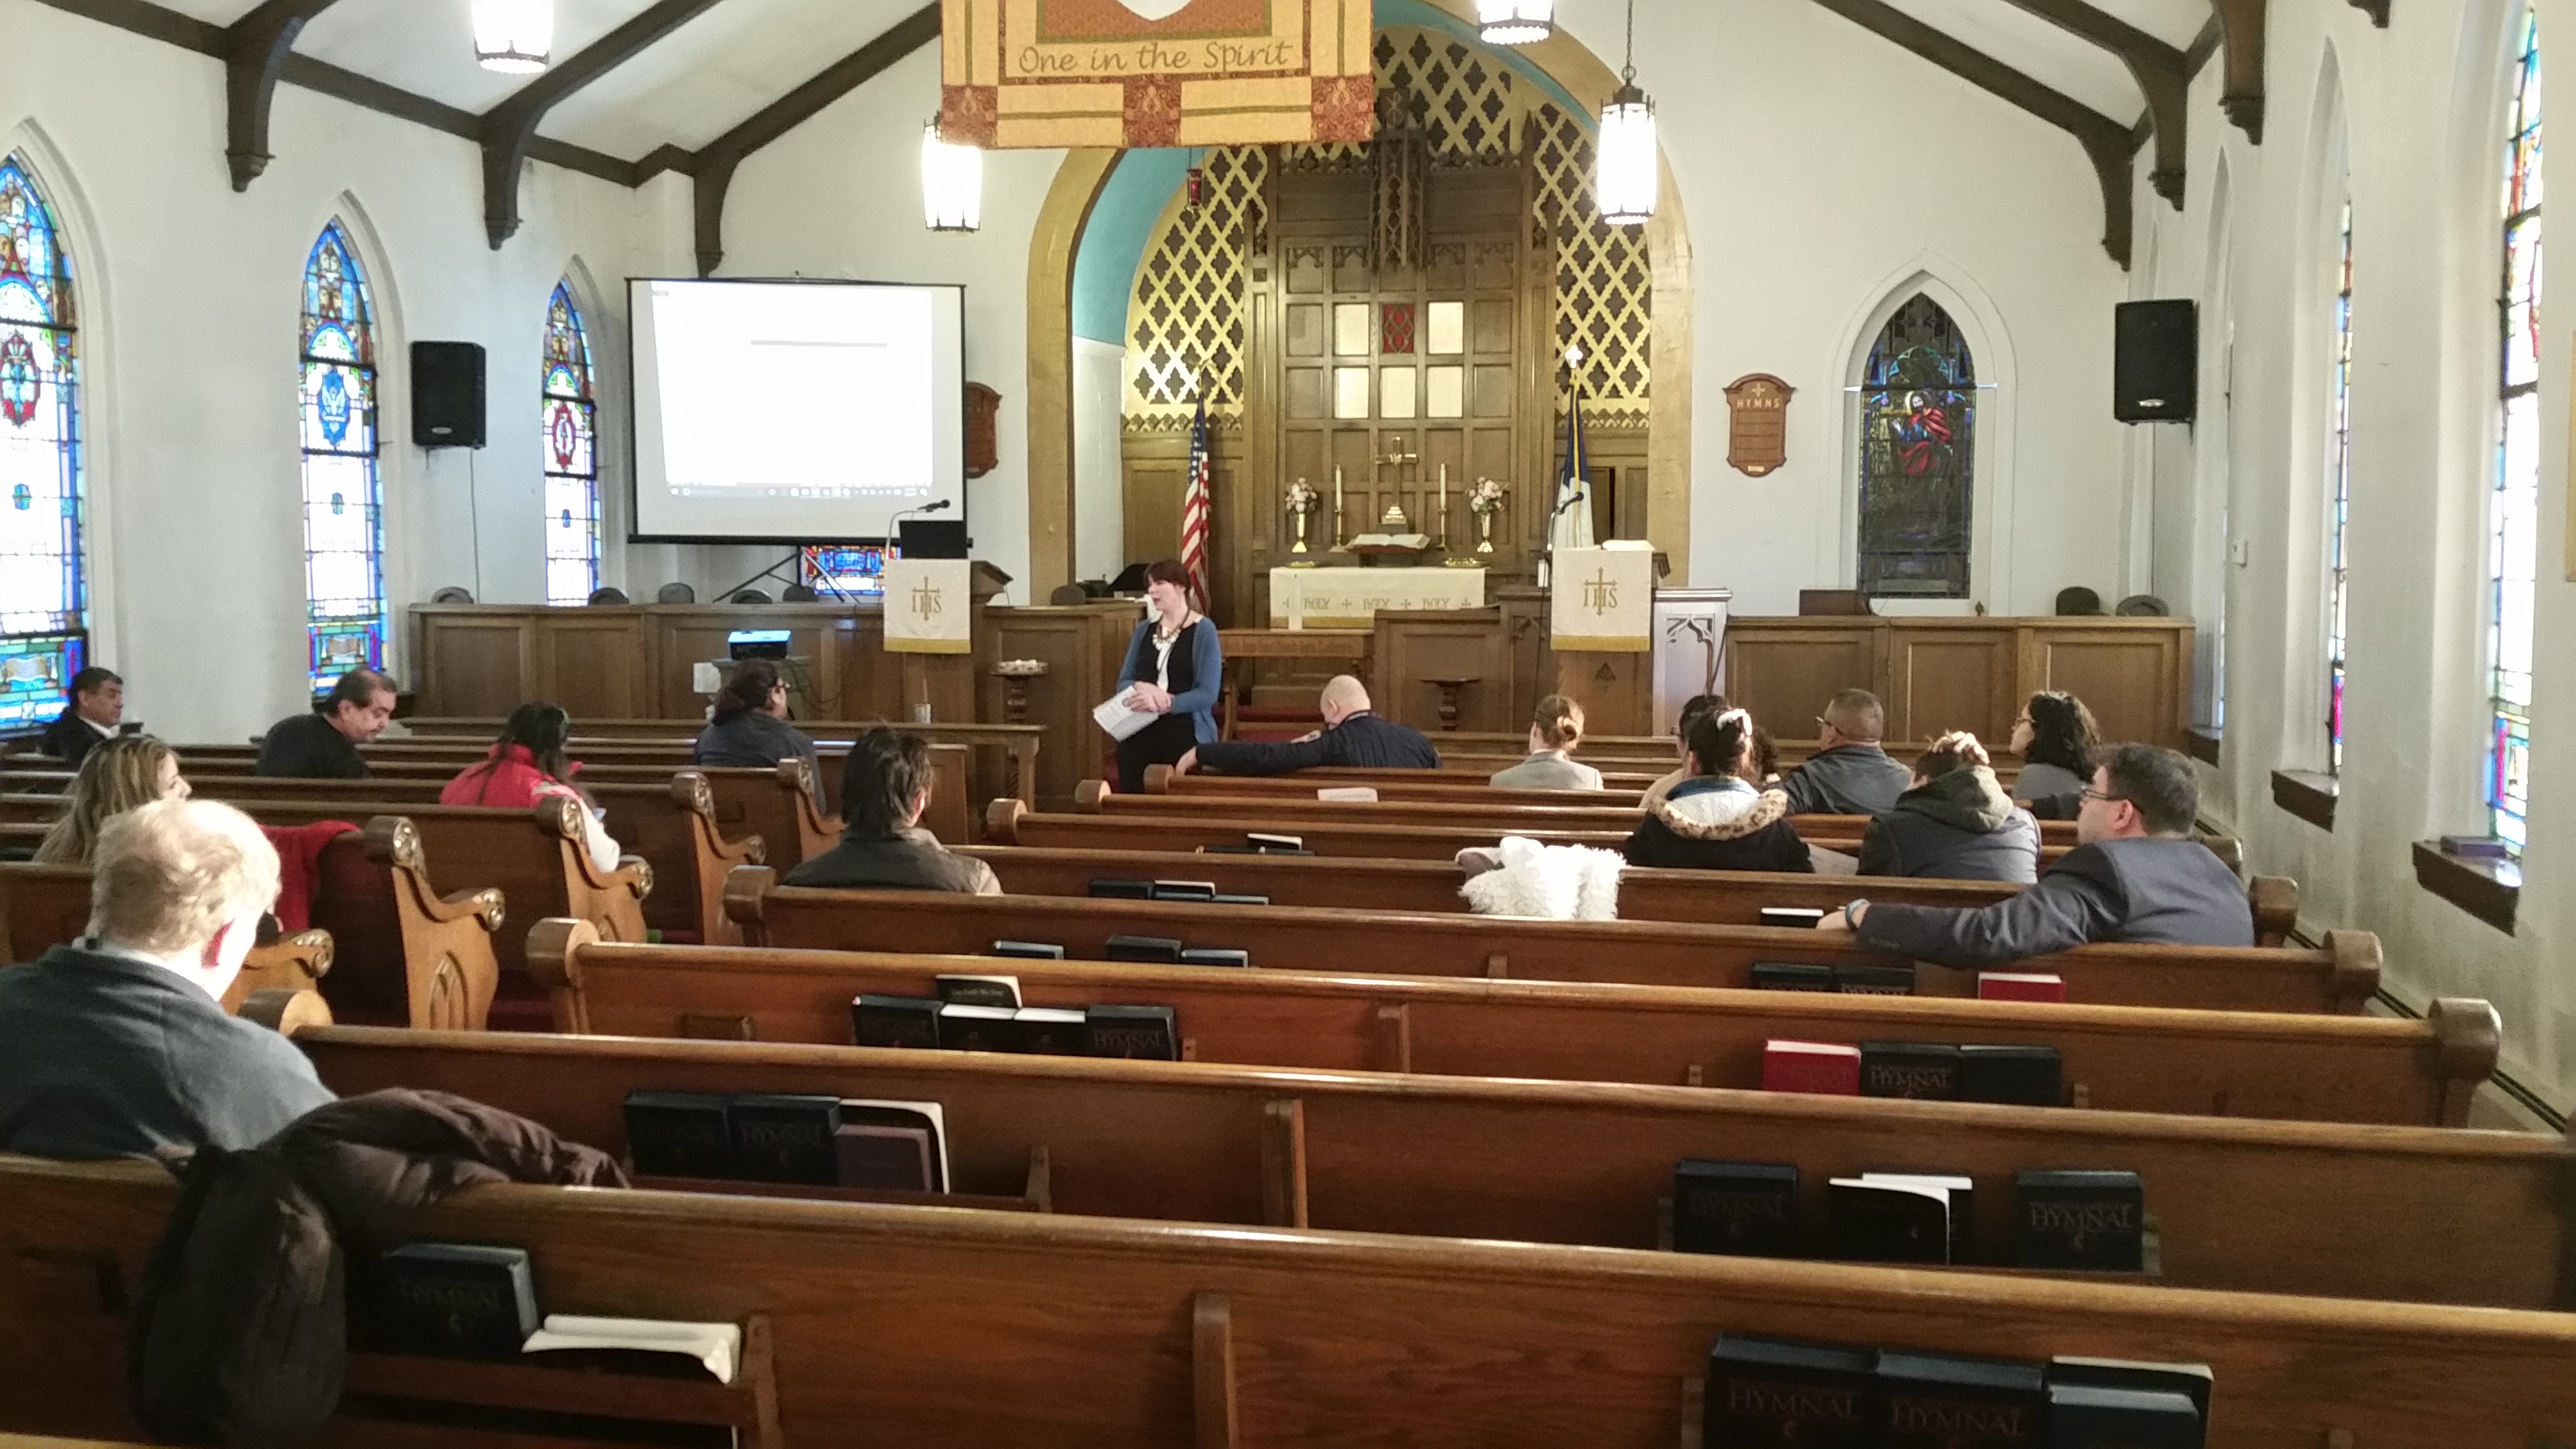 CRB Presentation in Salem UMC Church